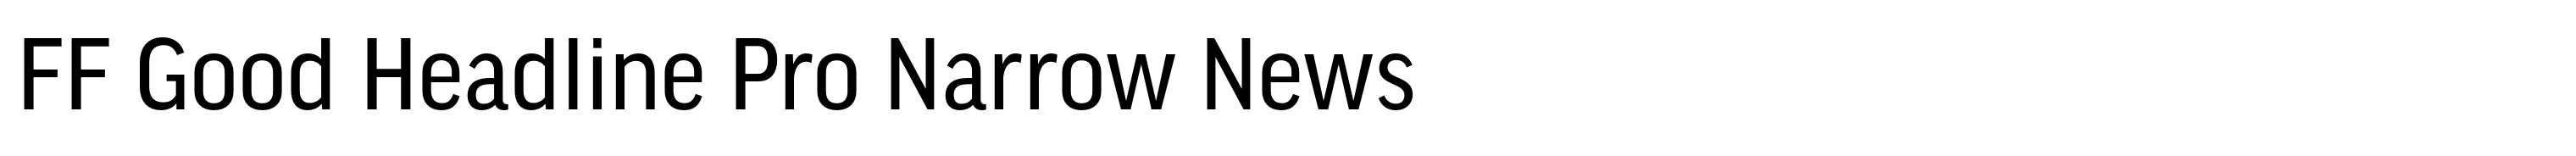 FF Good Headline Pro Narrow News